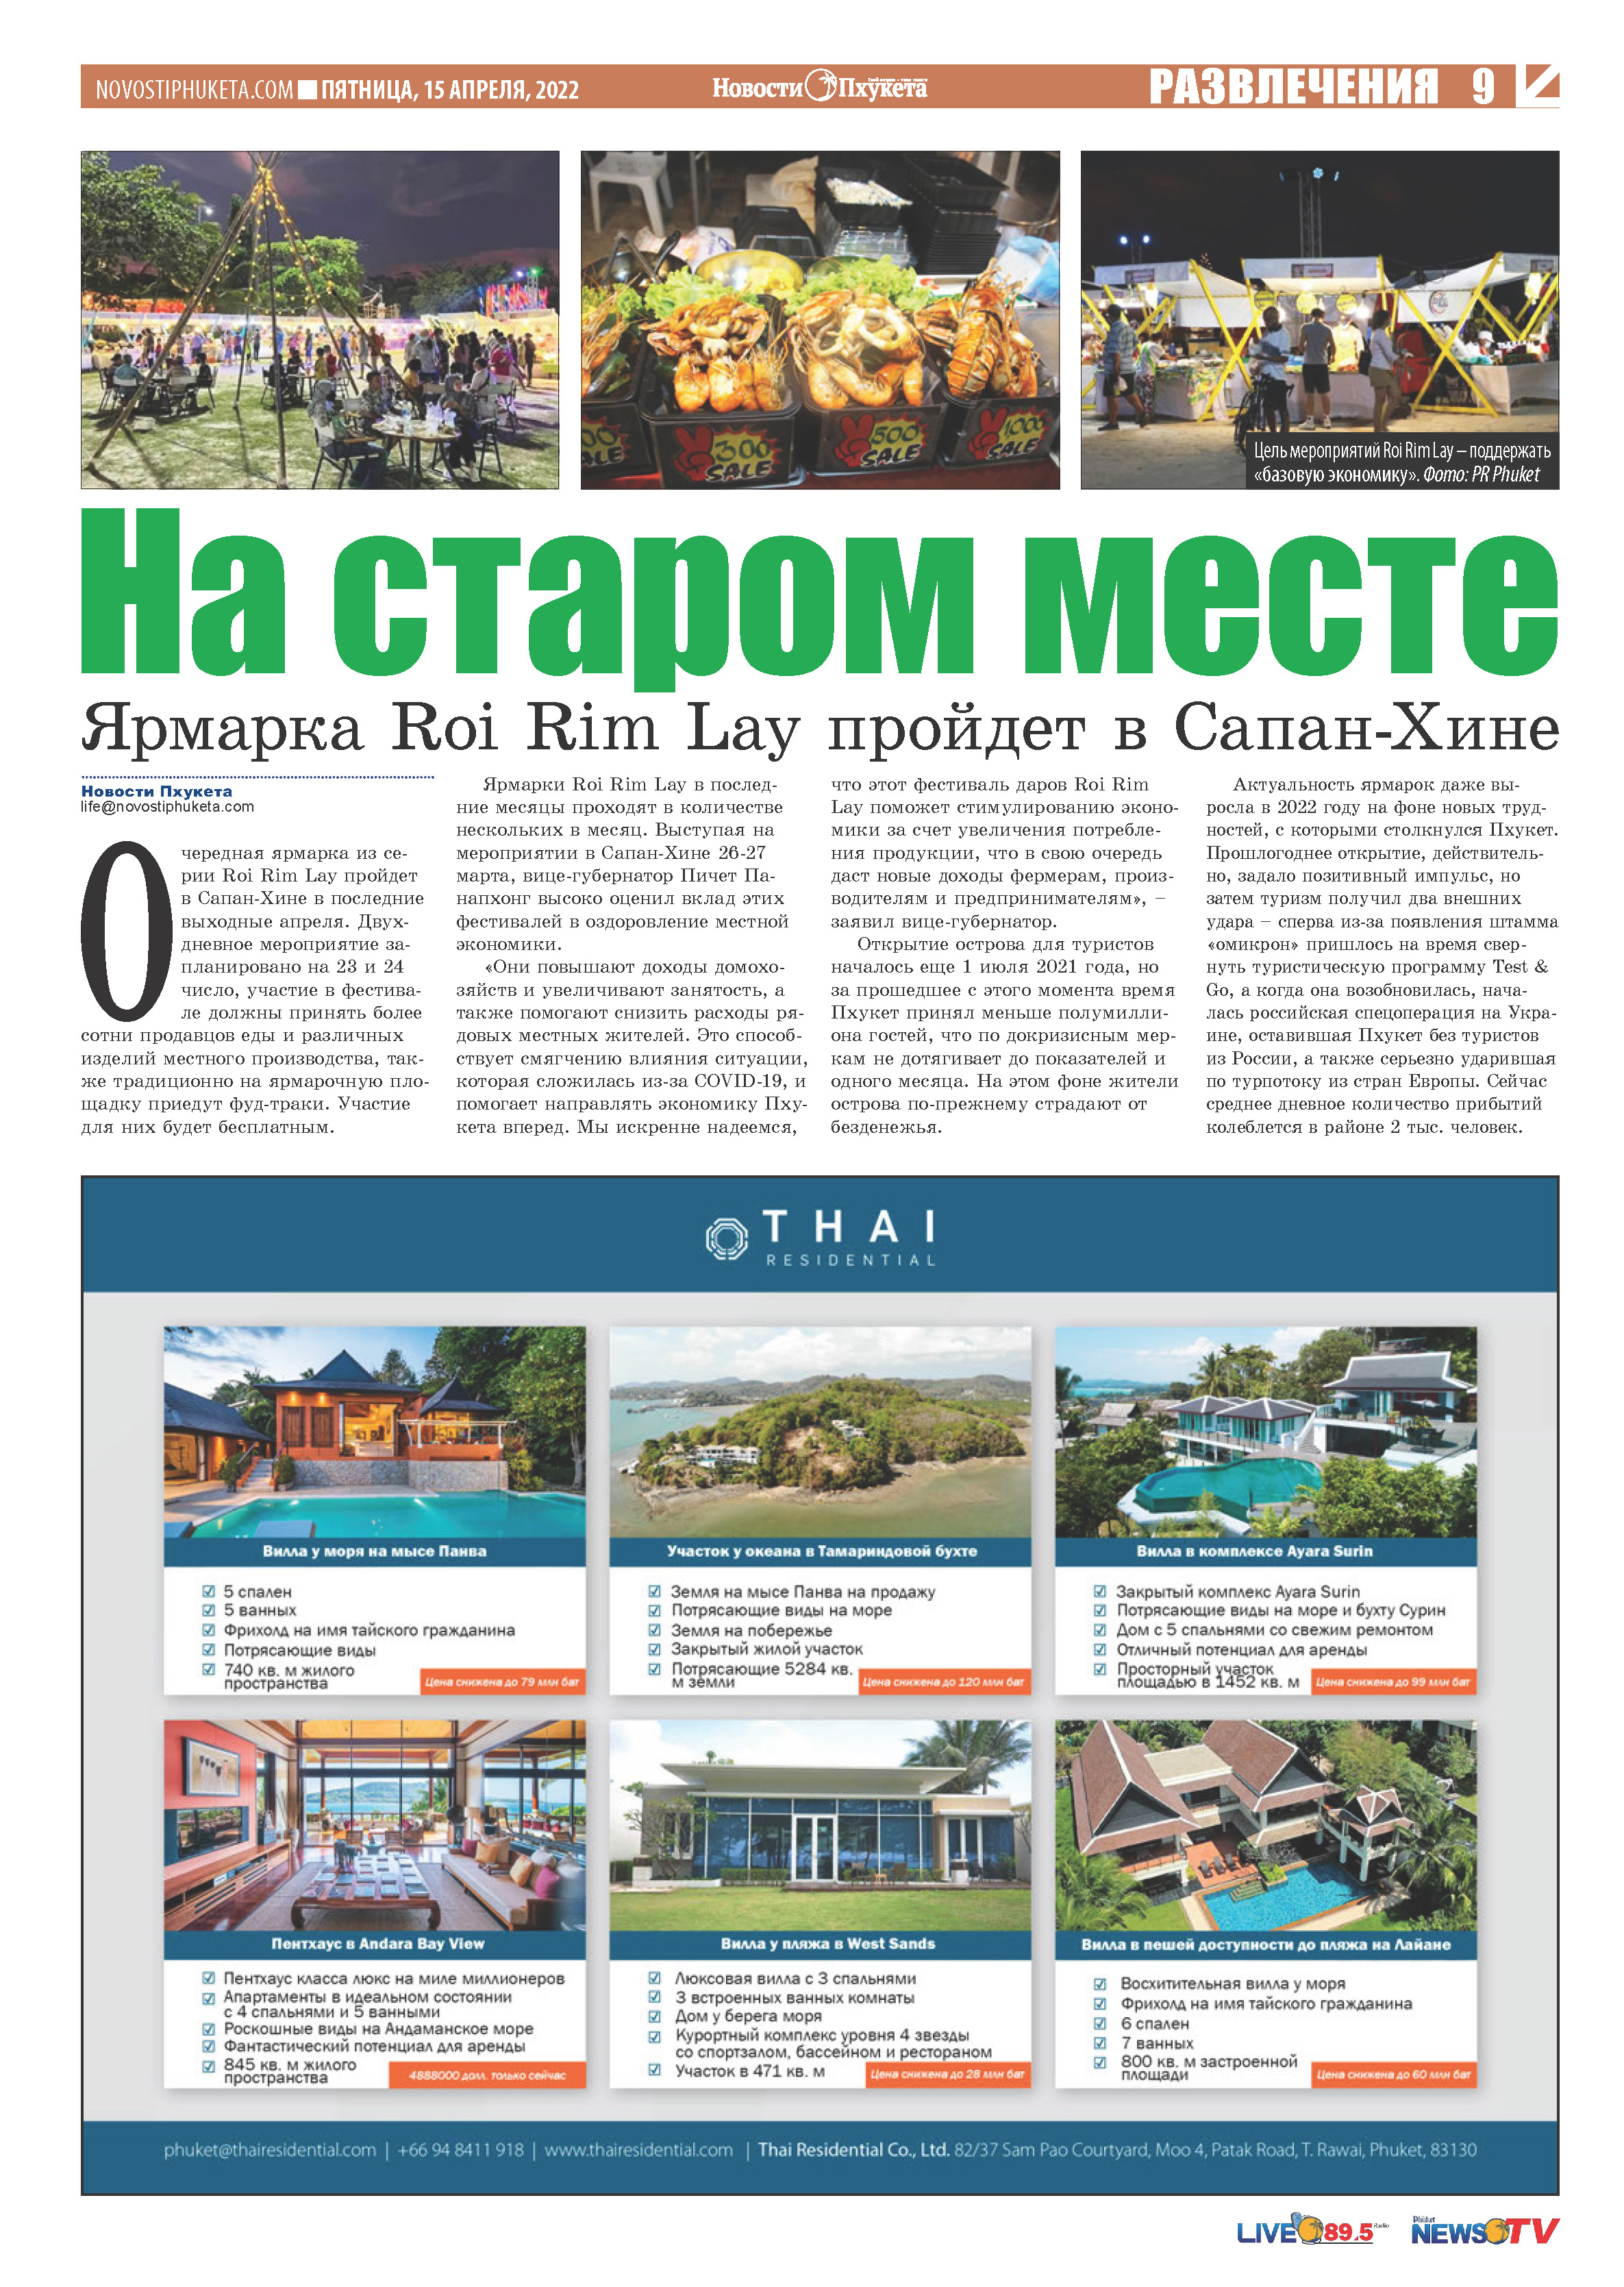 Phuket Newspaper - https://www.novostiphuketa.com/archive/15-04-2022/15-04-2022_Page_09.jpg